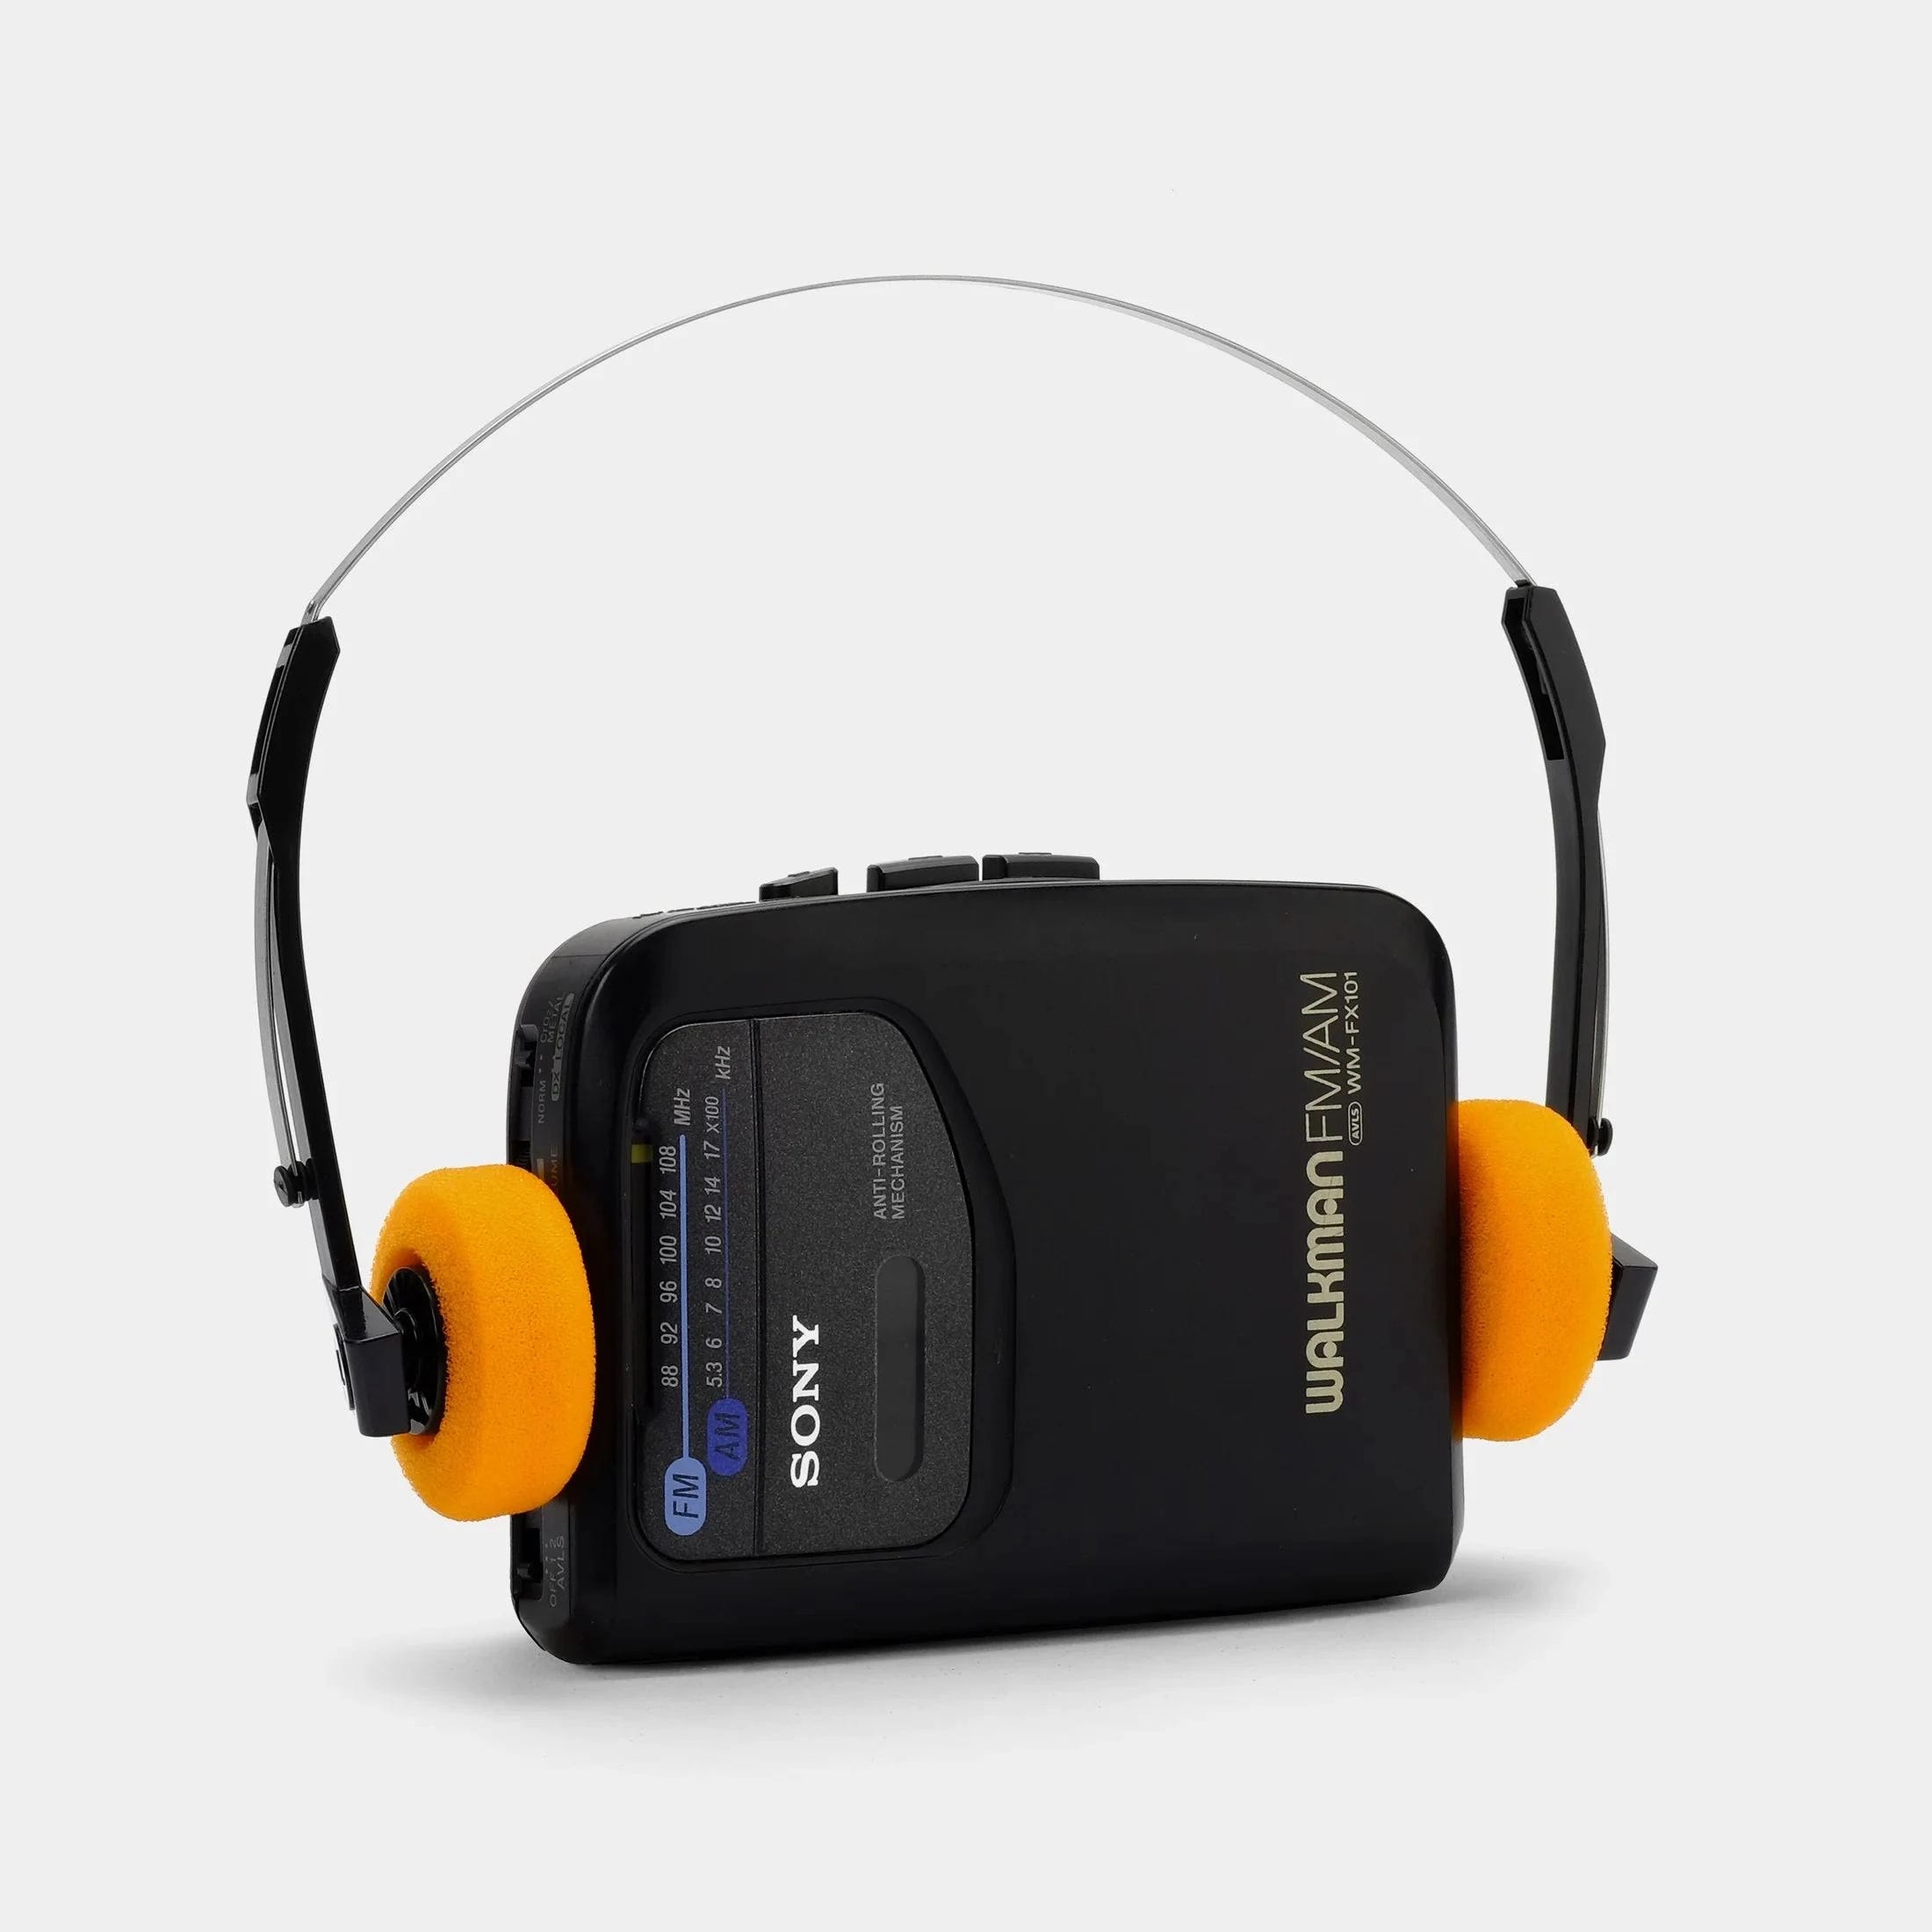 New Sony Walkman Wm-fx101 AM/FM Radio Cassette Tape Player | Image